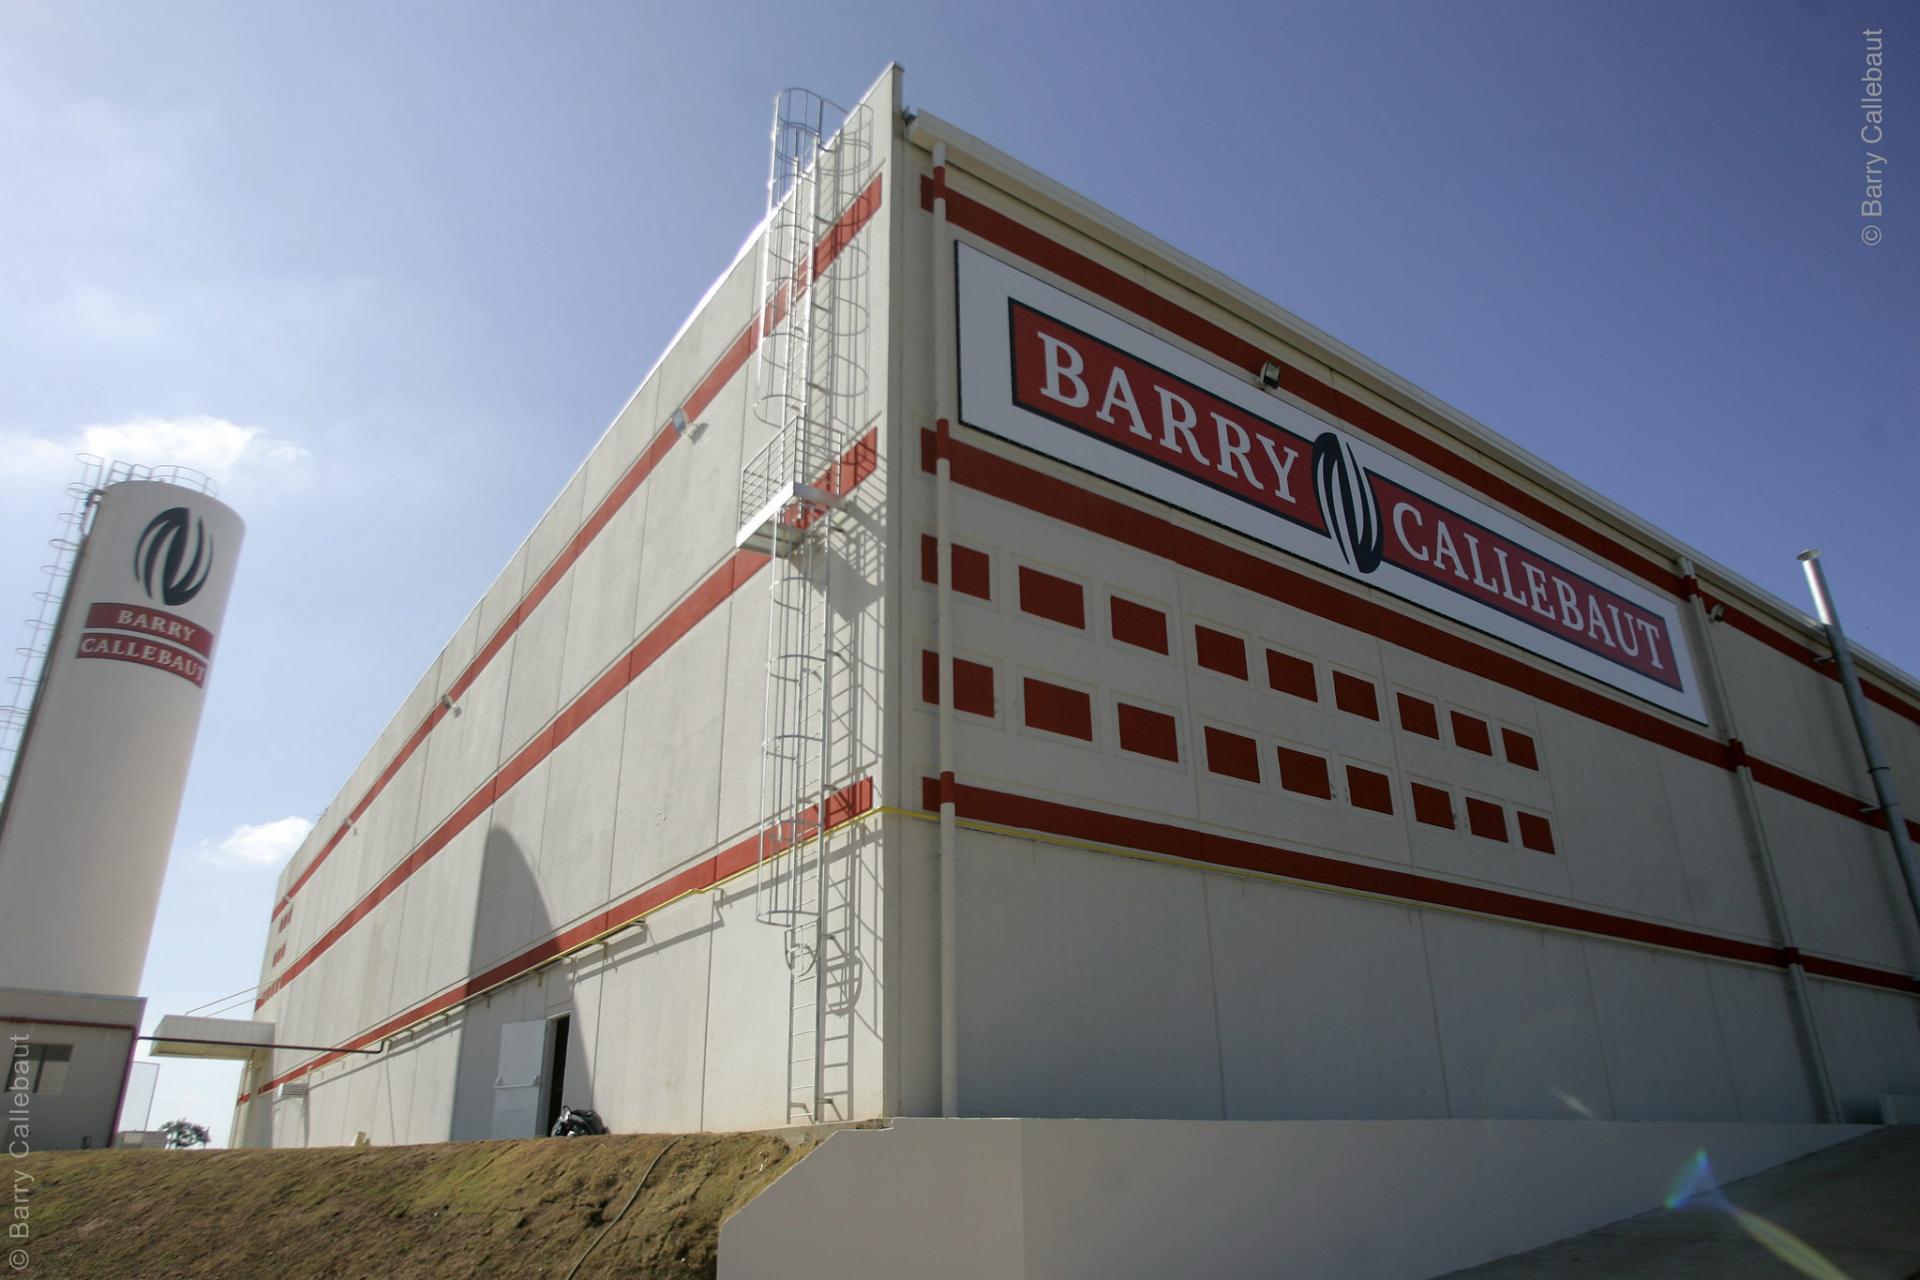 Barry Callebaut factory